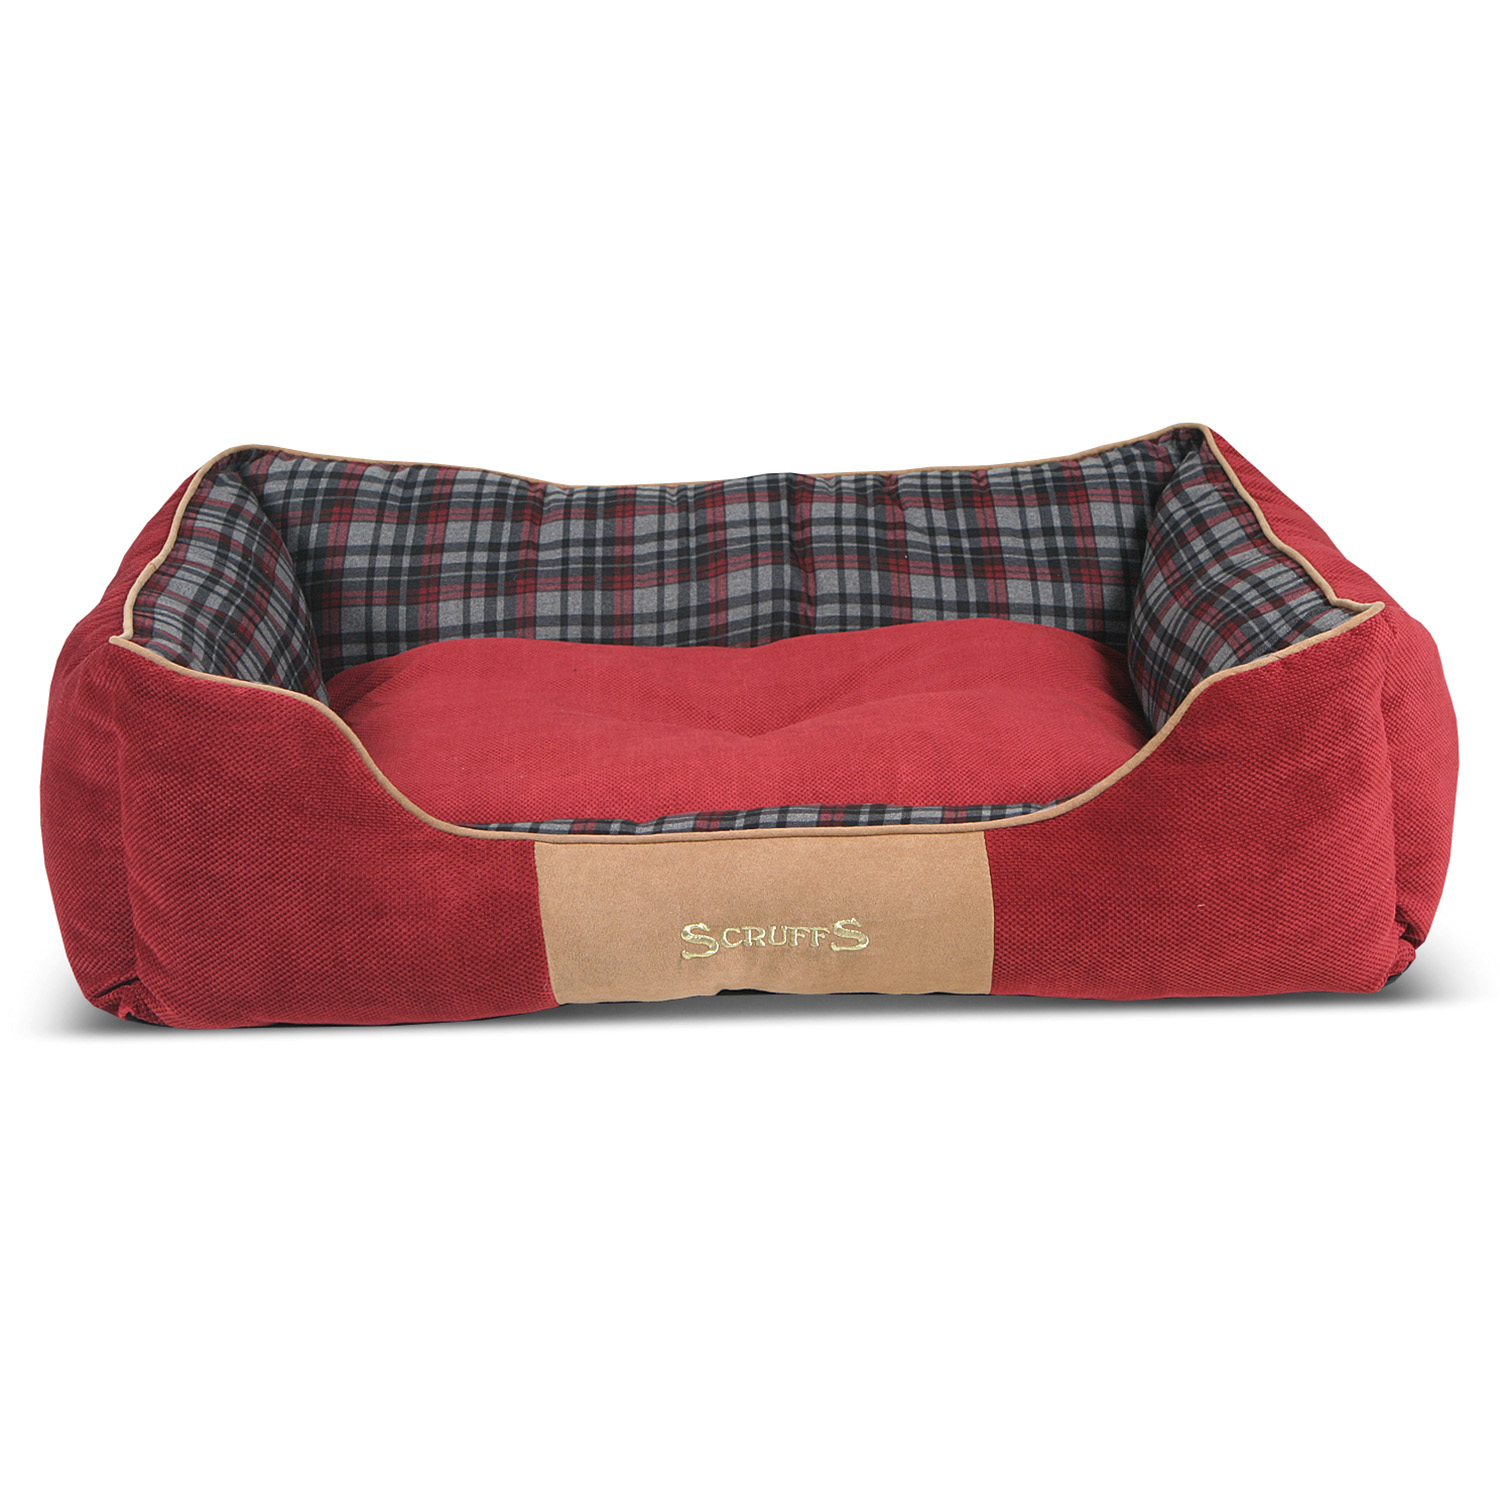 Scruffs Highland Box Bed Red - Xlarge